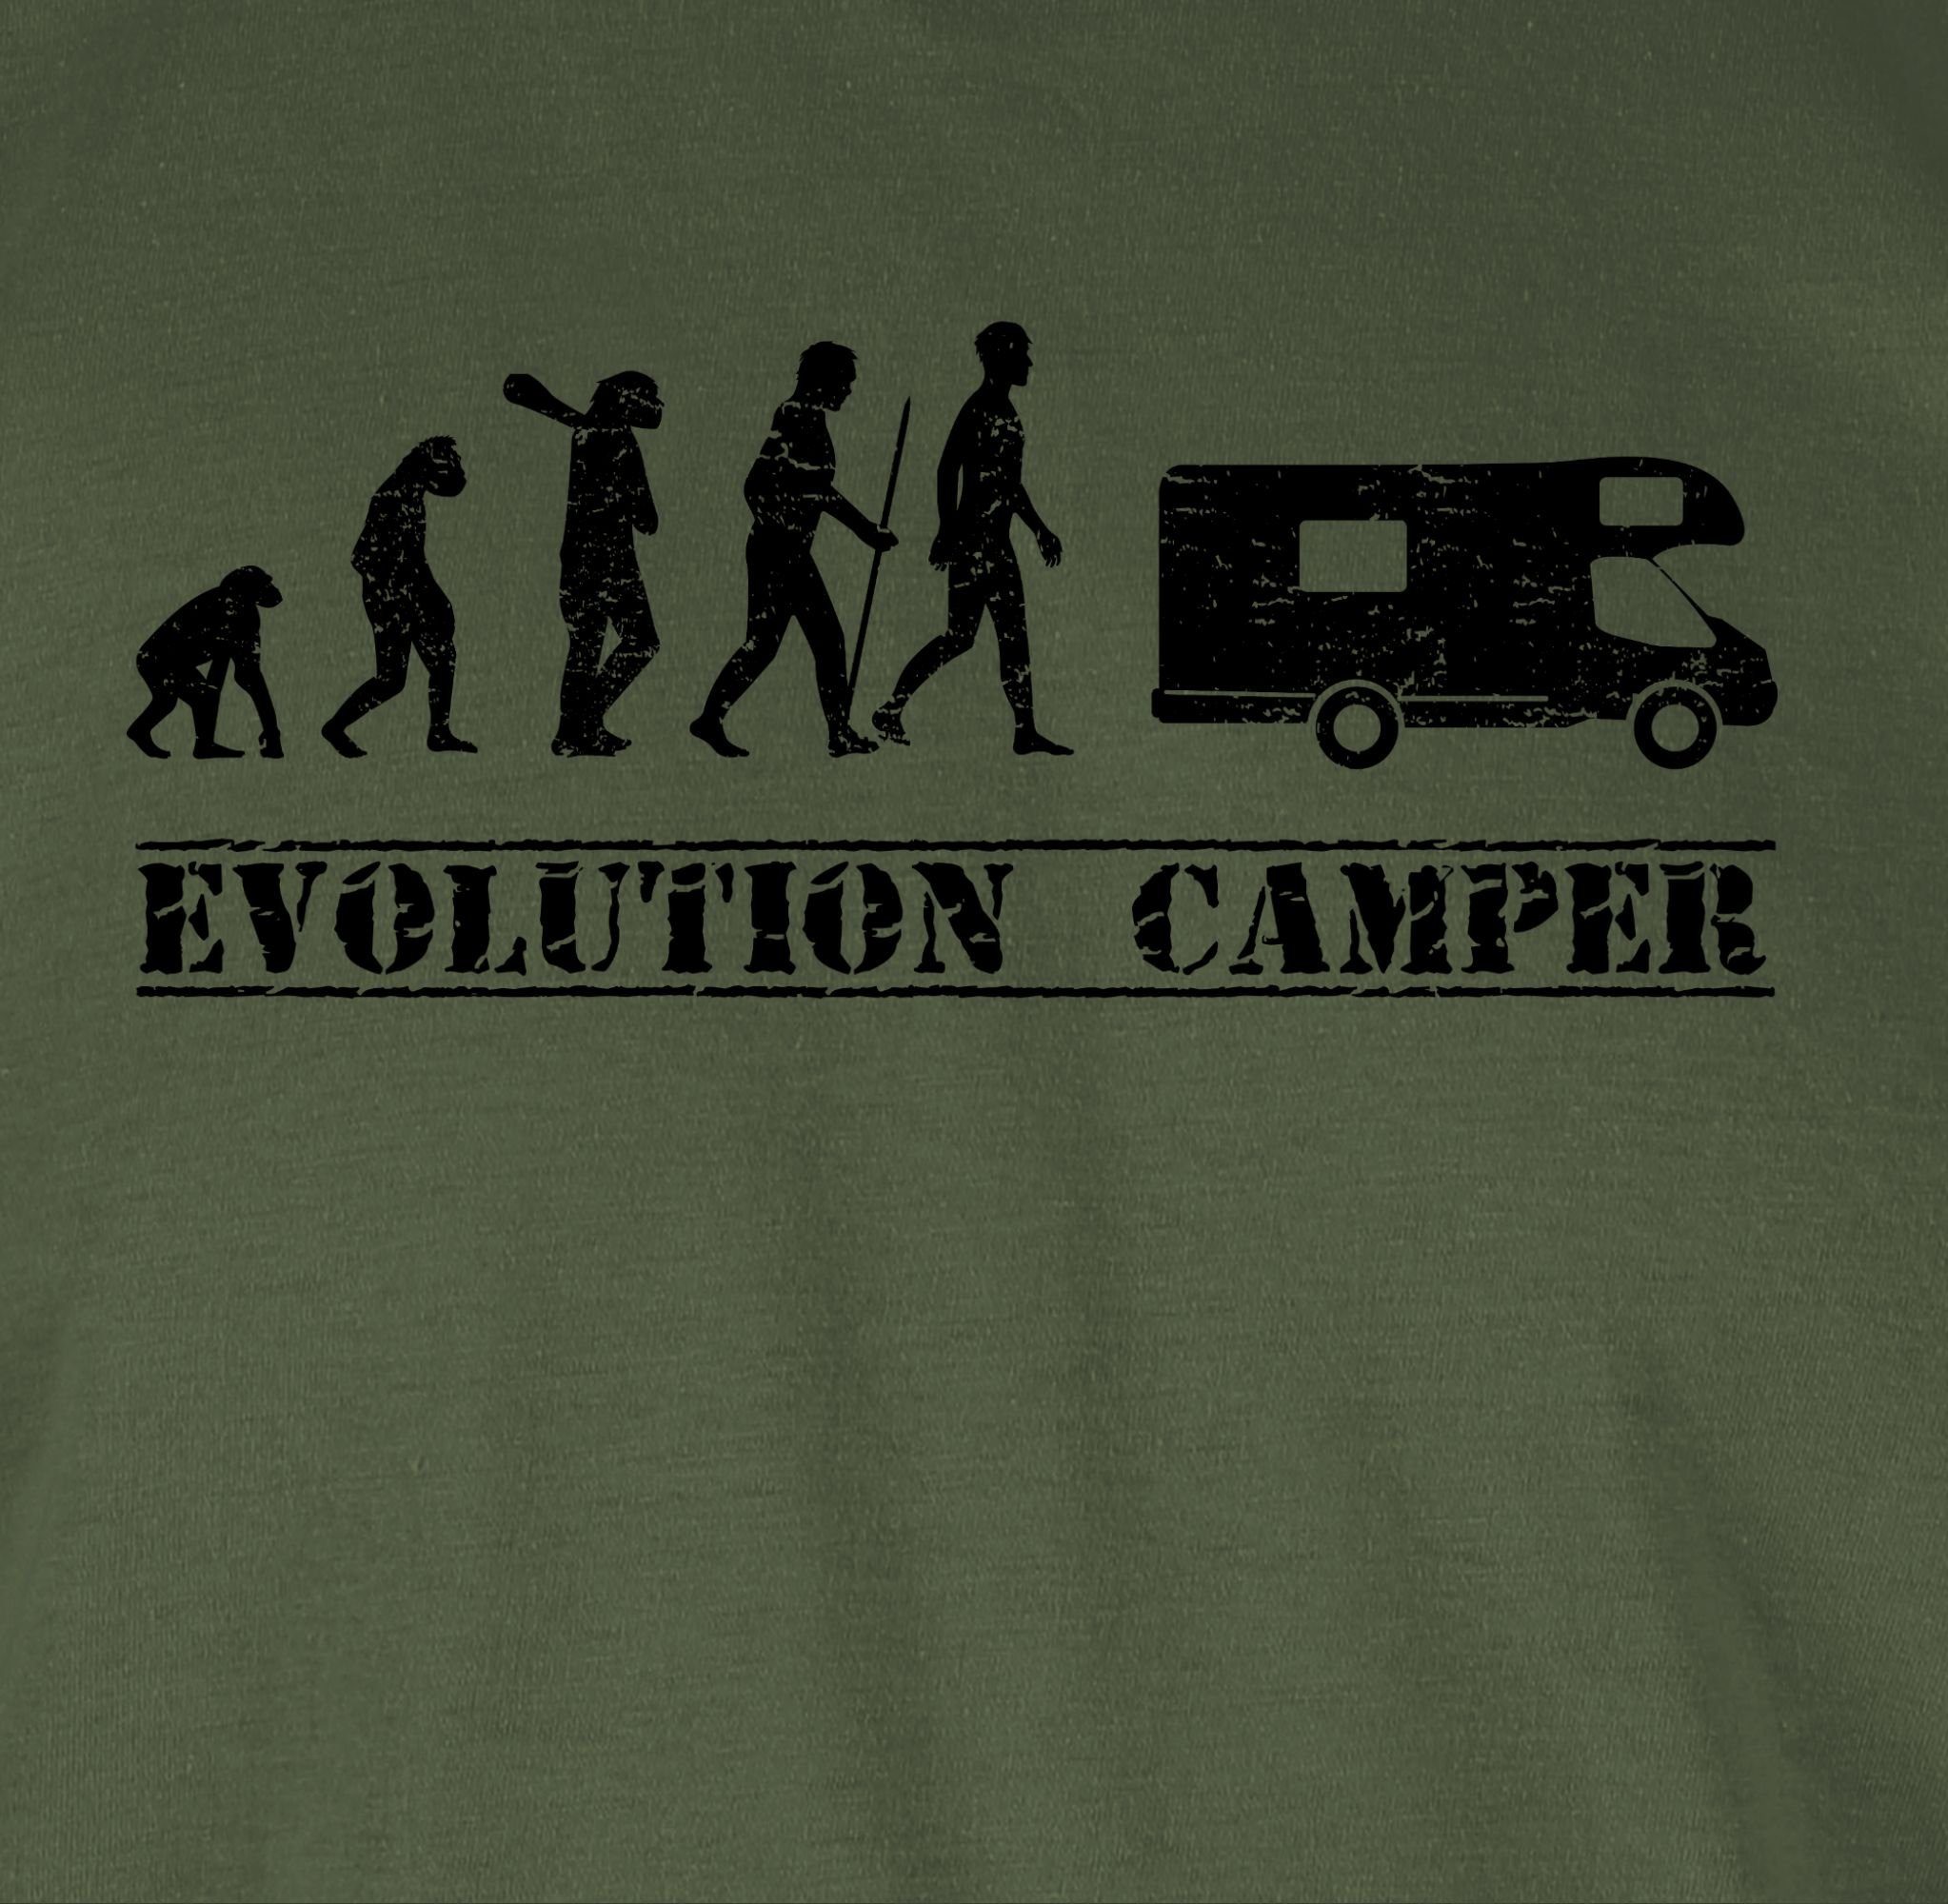 Grün Evolution Outfit T-Shirt Shirtracer 02 Evolution Army Camper